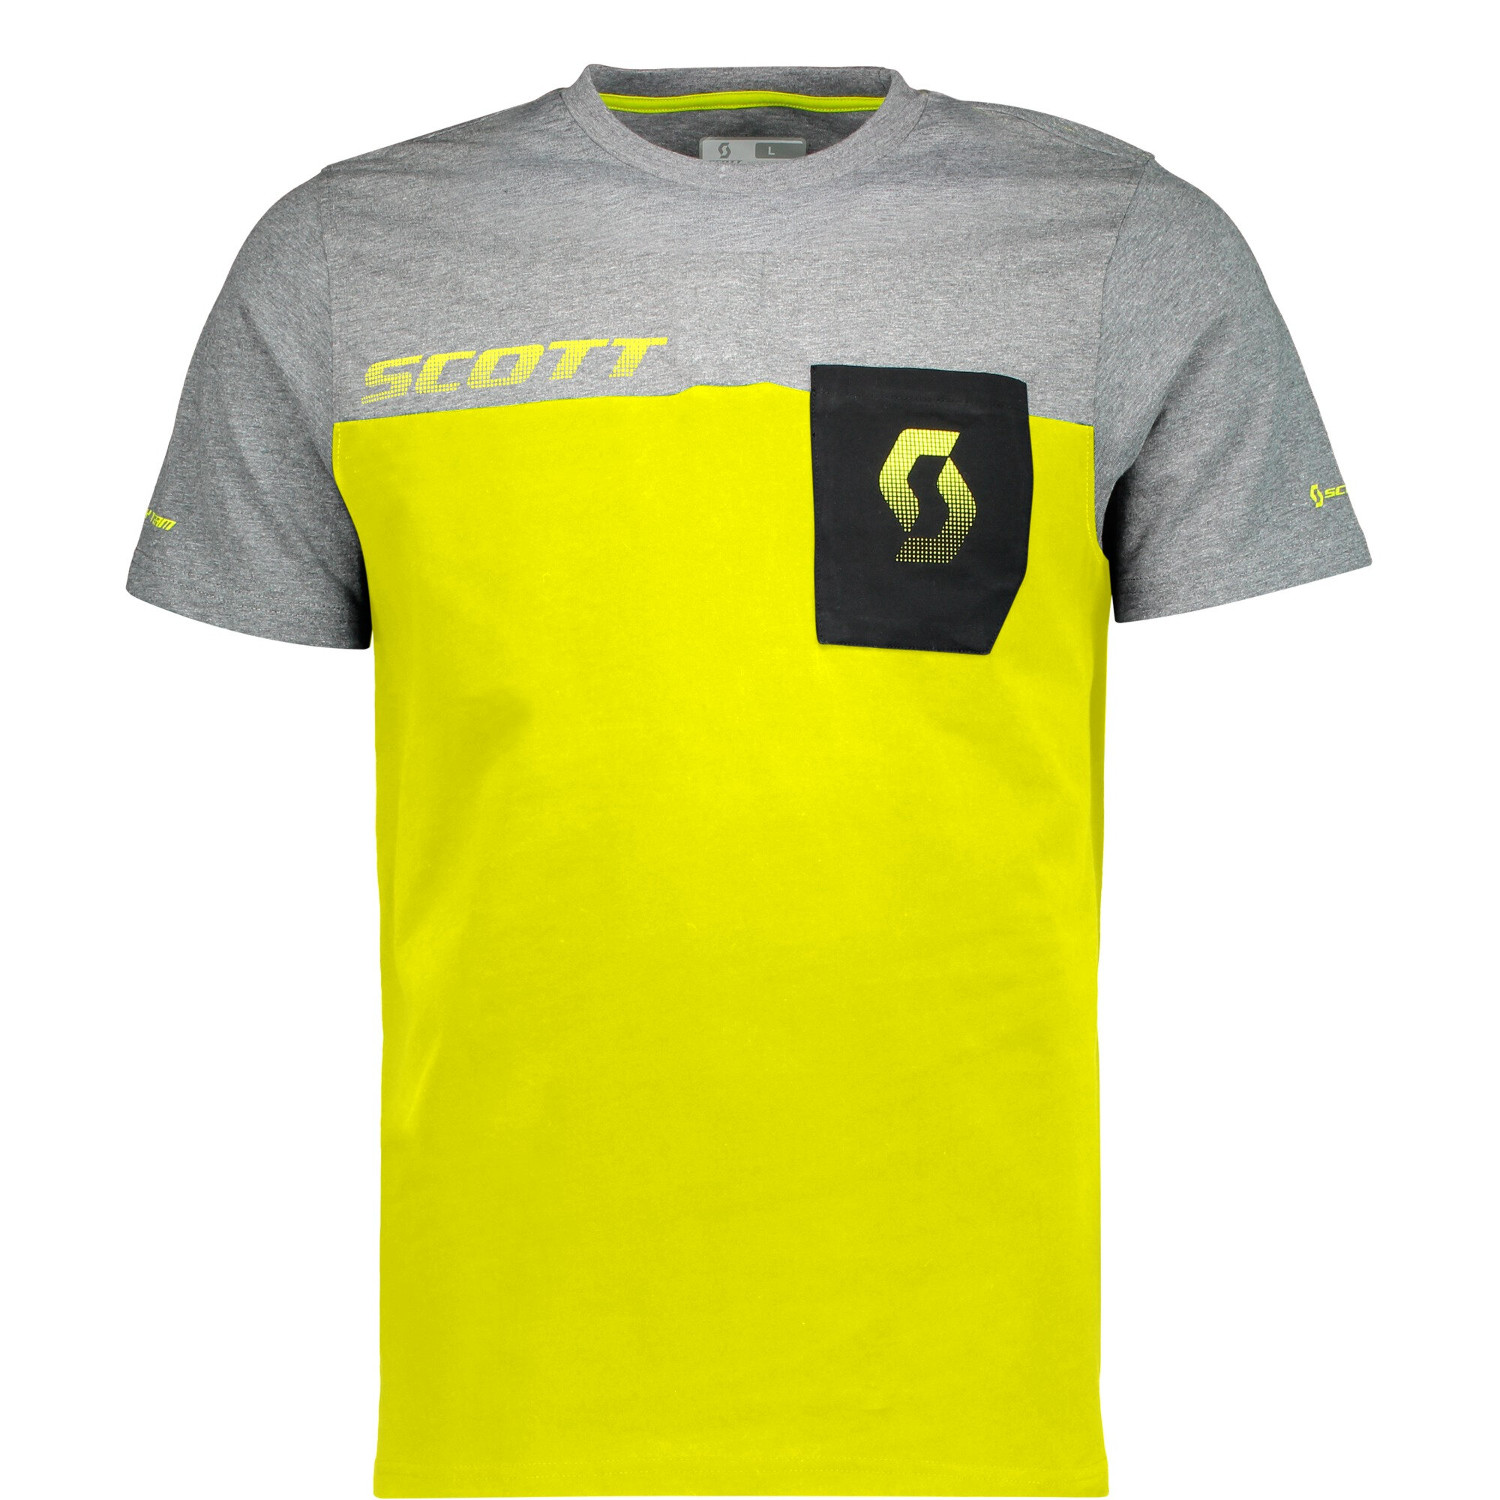 Scott T-Shirt Factory Team CO Sulphur Giallo/Grigio Scuro Melange